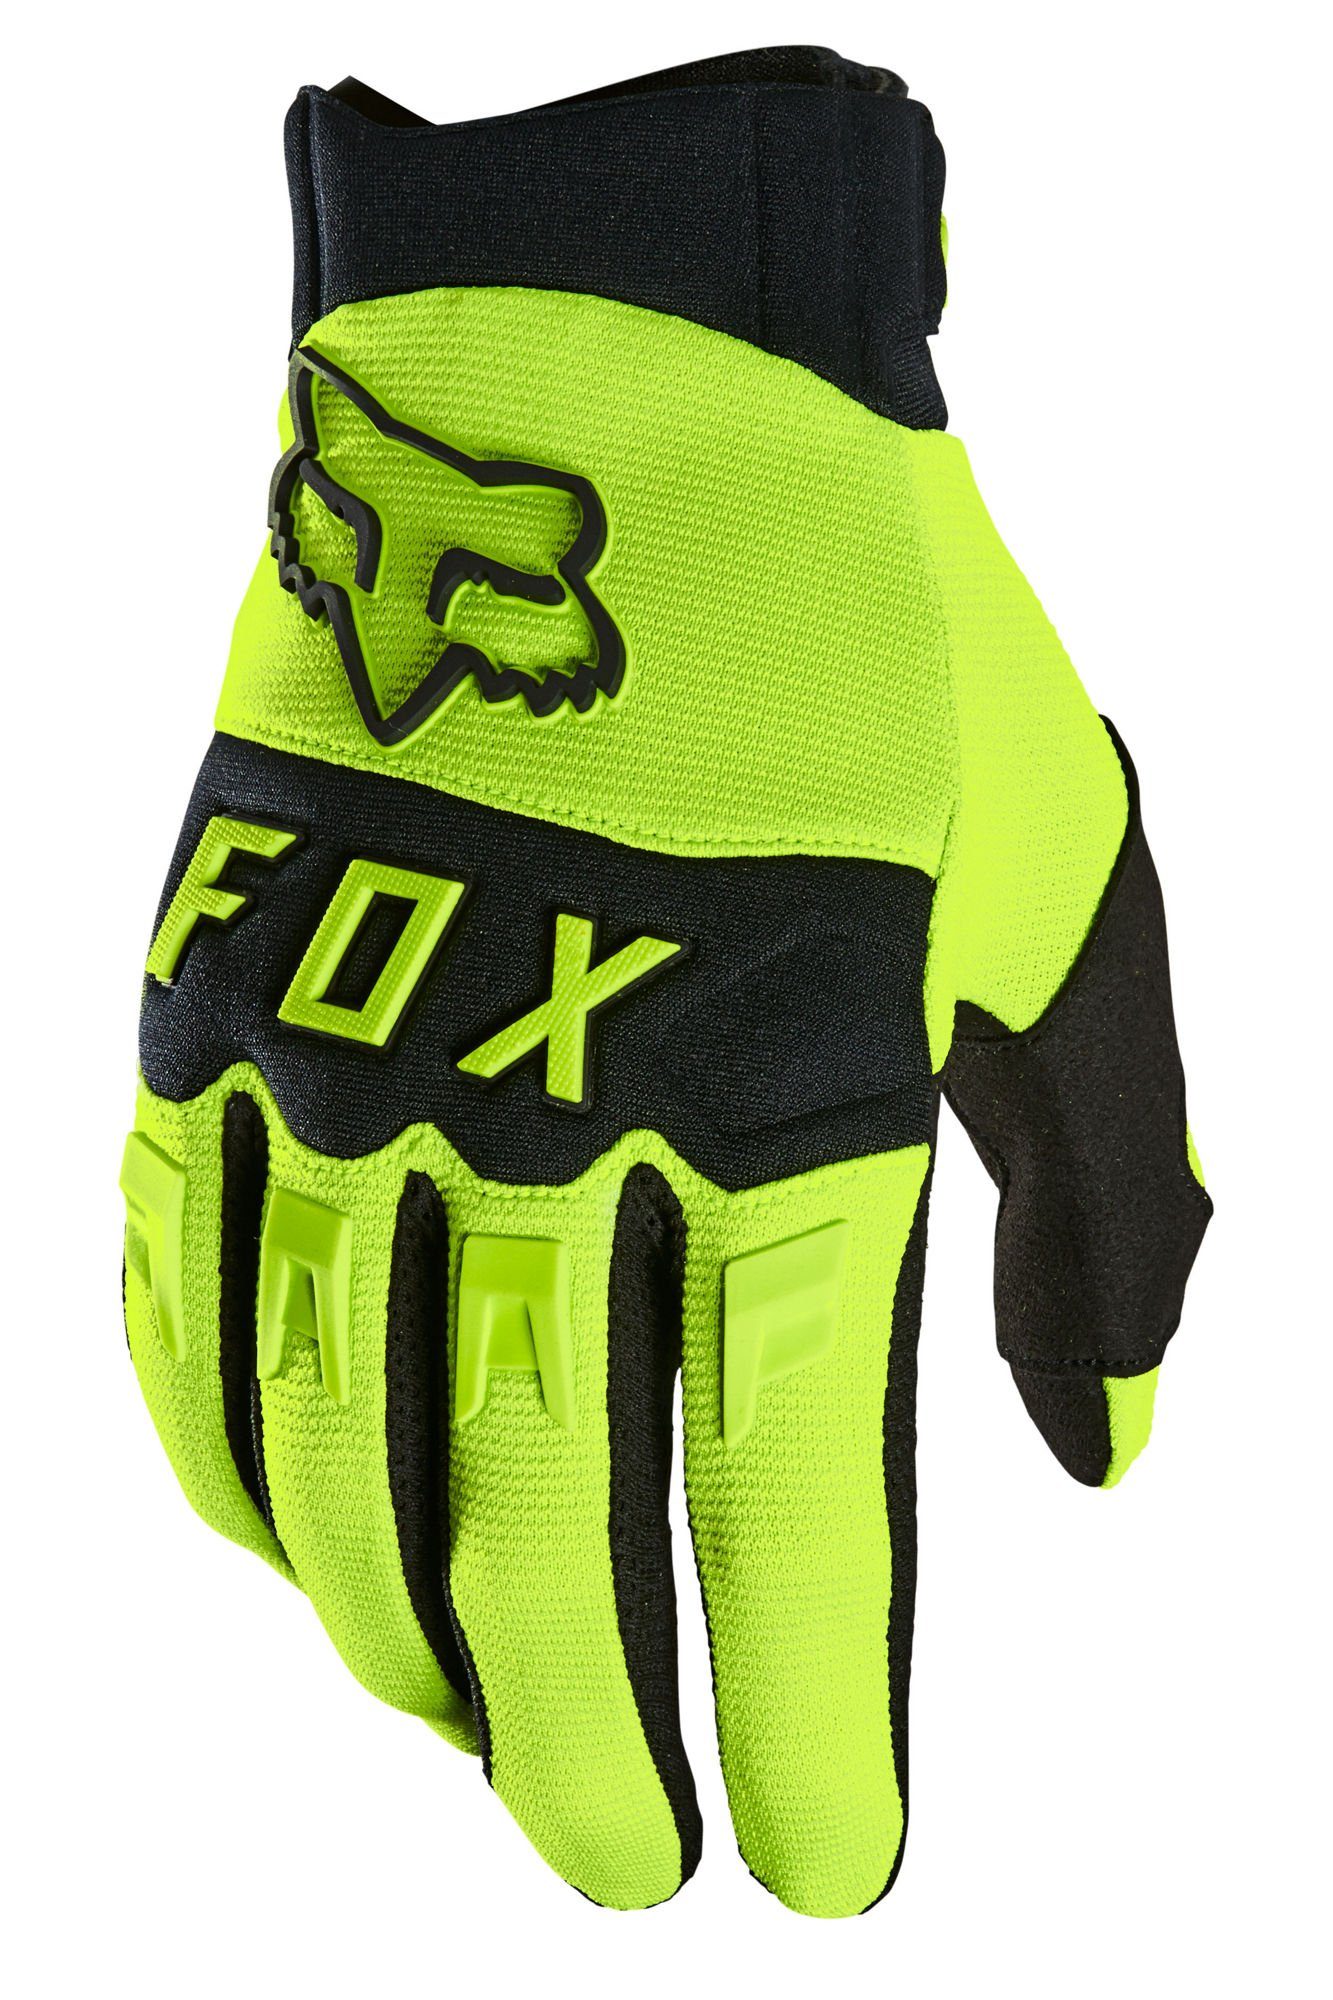 Fox Racing Motorradhandschuhe Fox Handschuhe Gelb Neon YL Dirtpaw Youth Glove